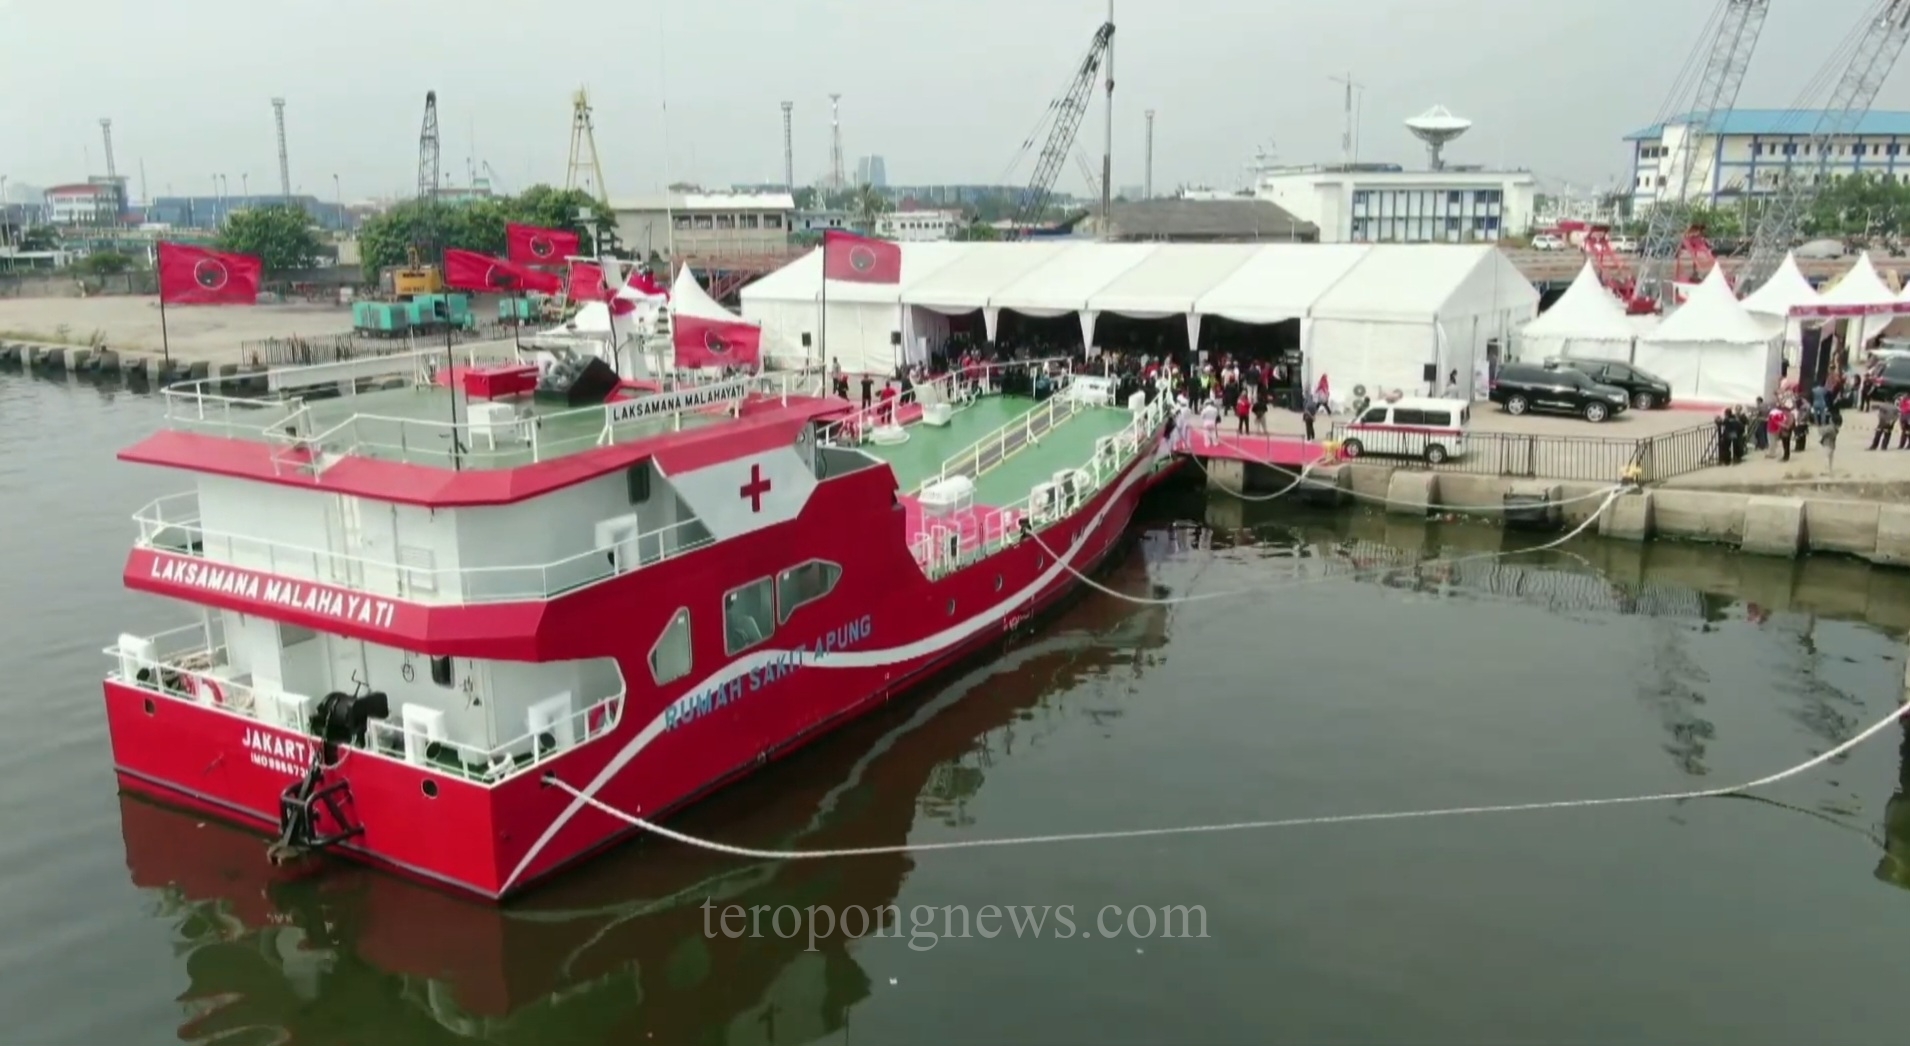 Megawati Soekarnoputri Resmikan Kapal RS Terapung Laksamana Malahayati